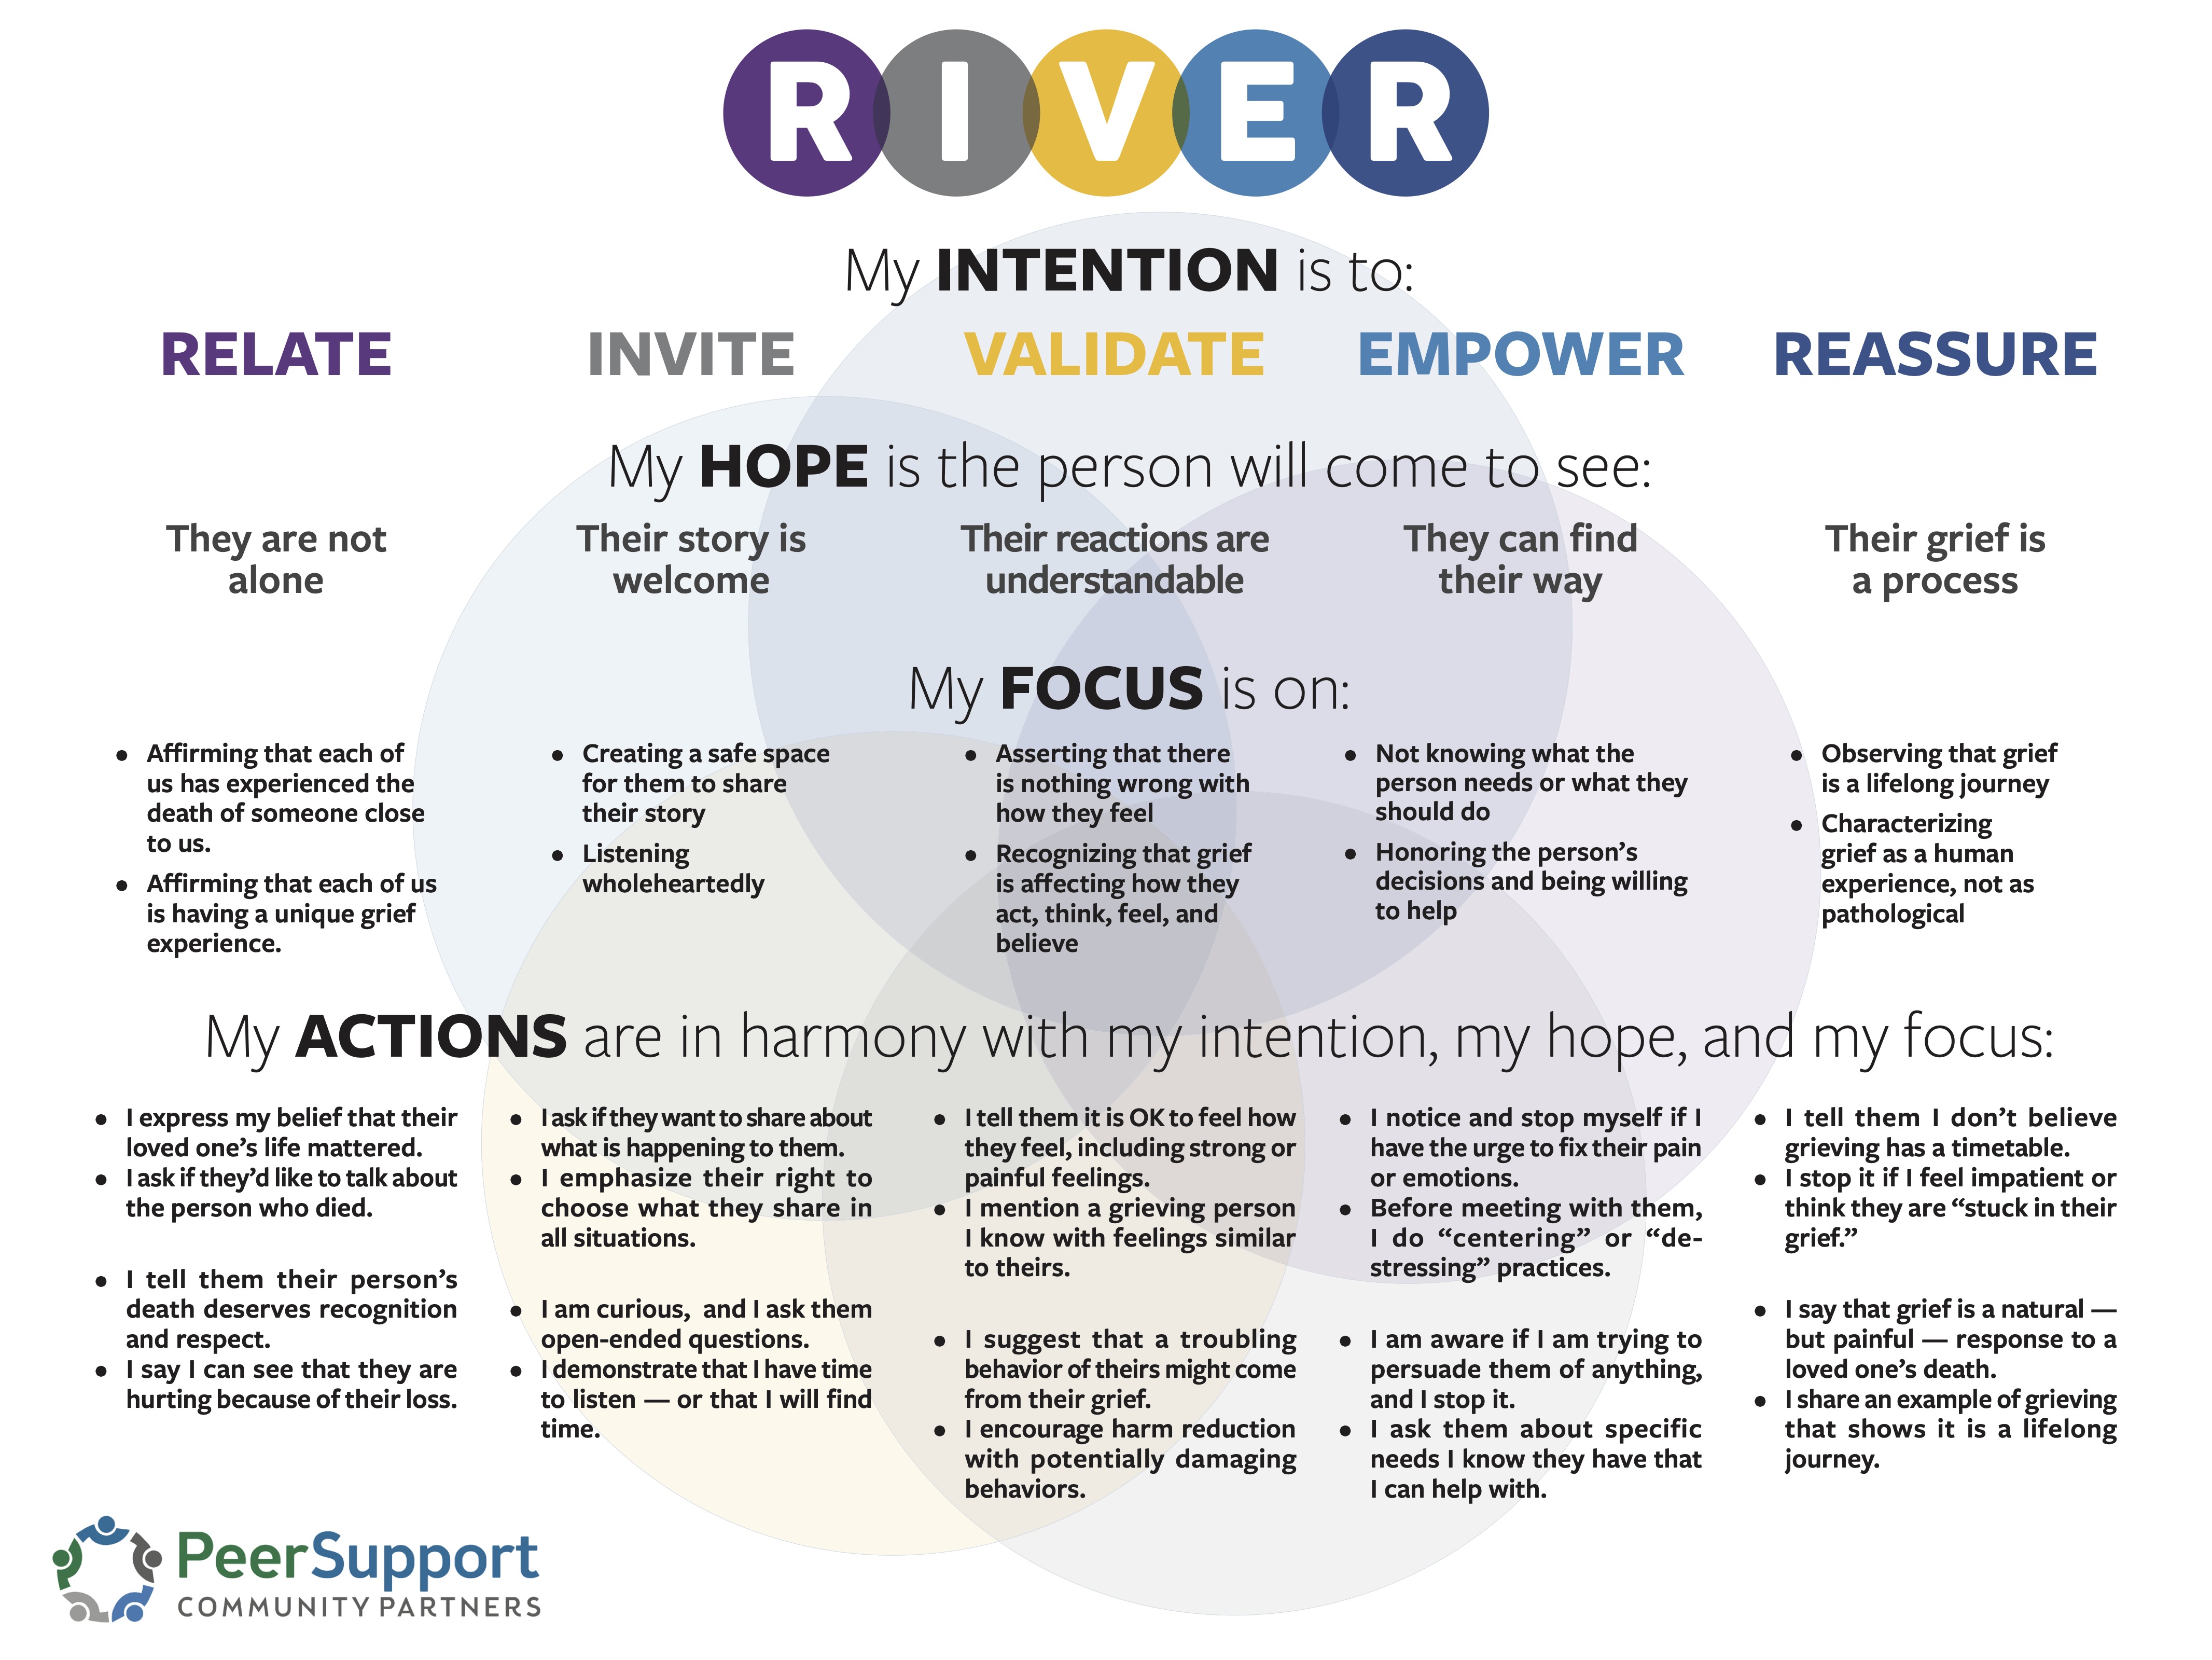 RIVER peer support model